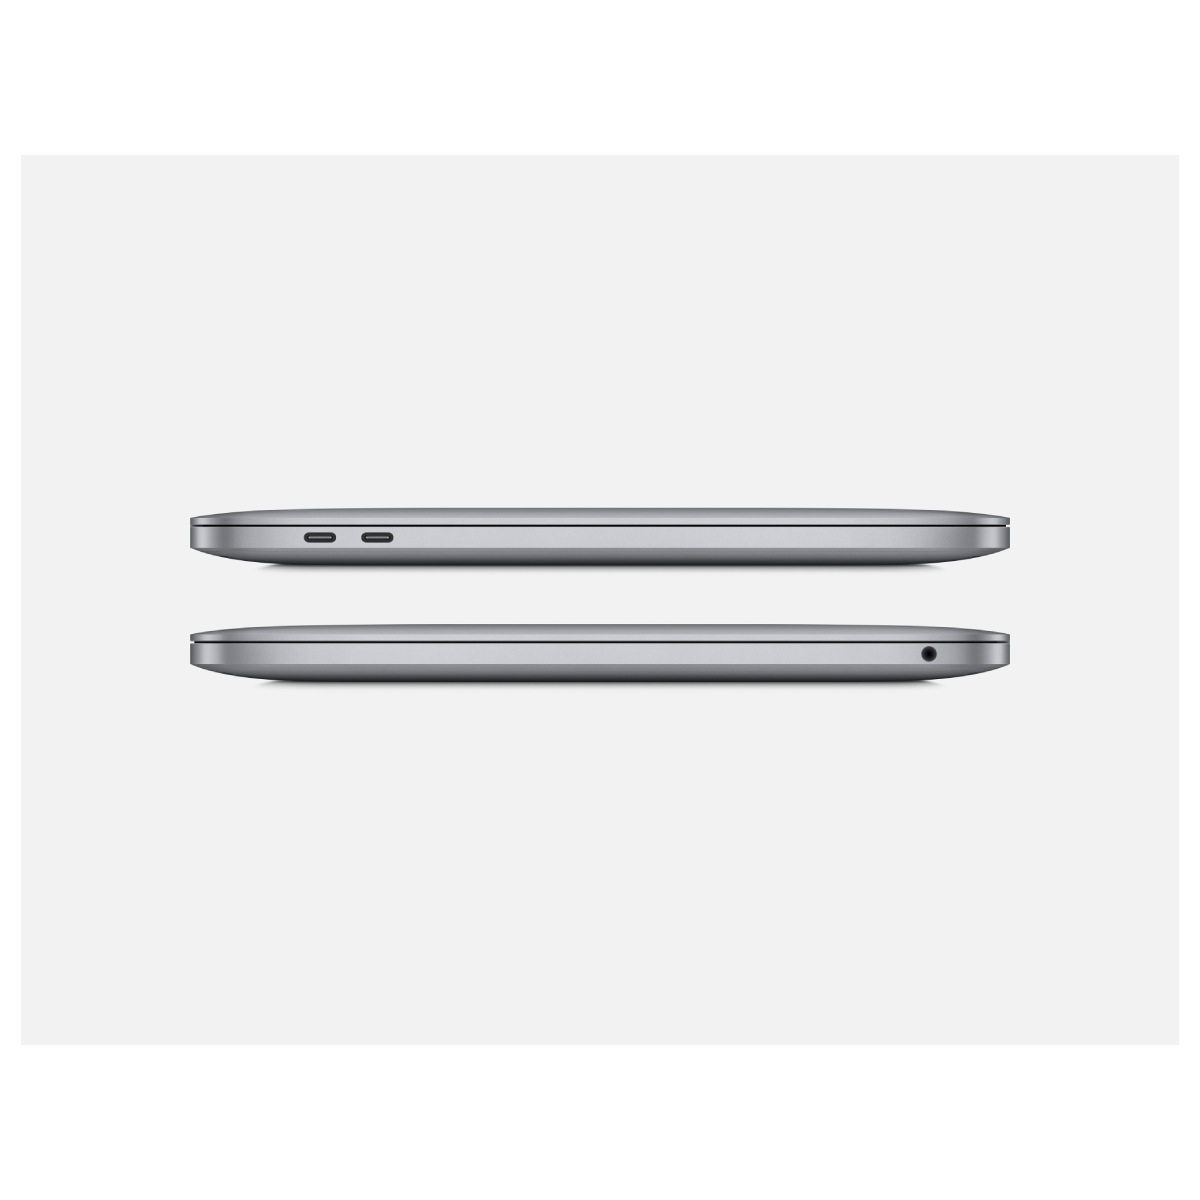 13-inch MacBook Pro M2